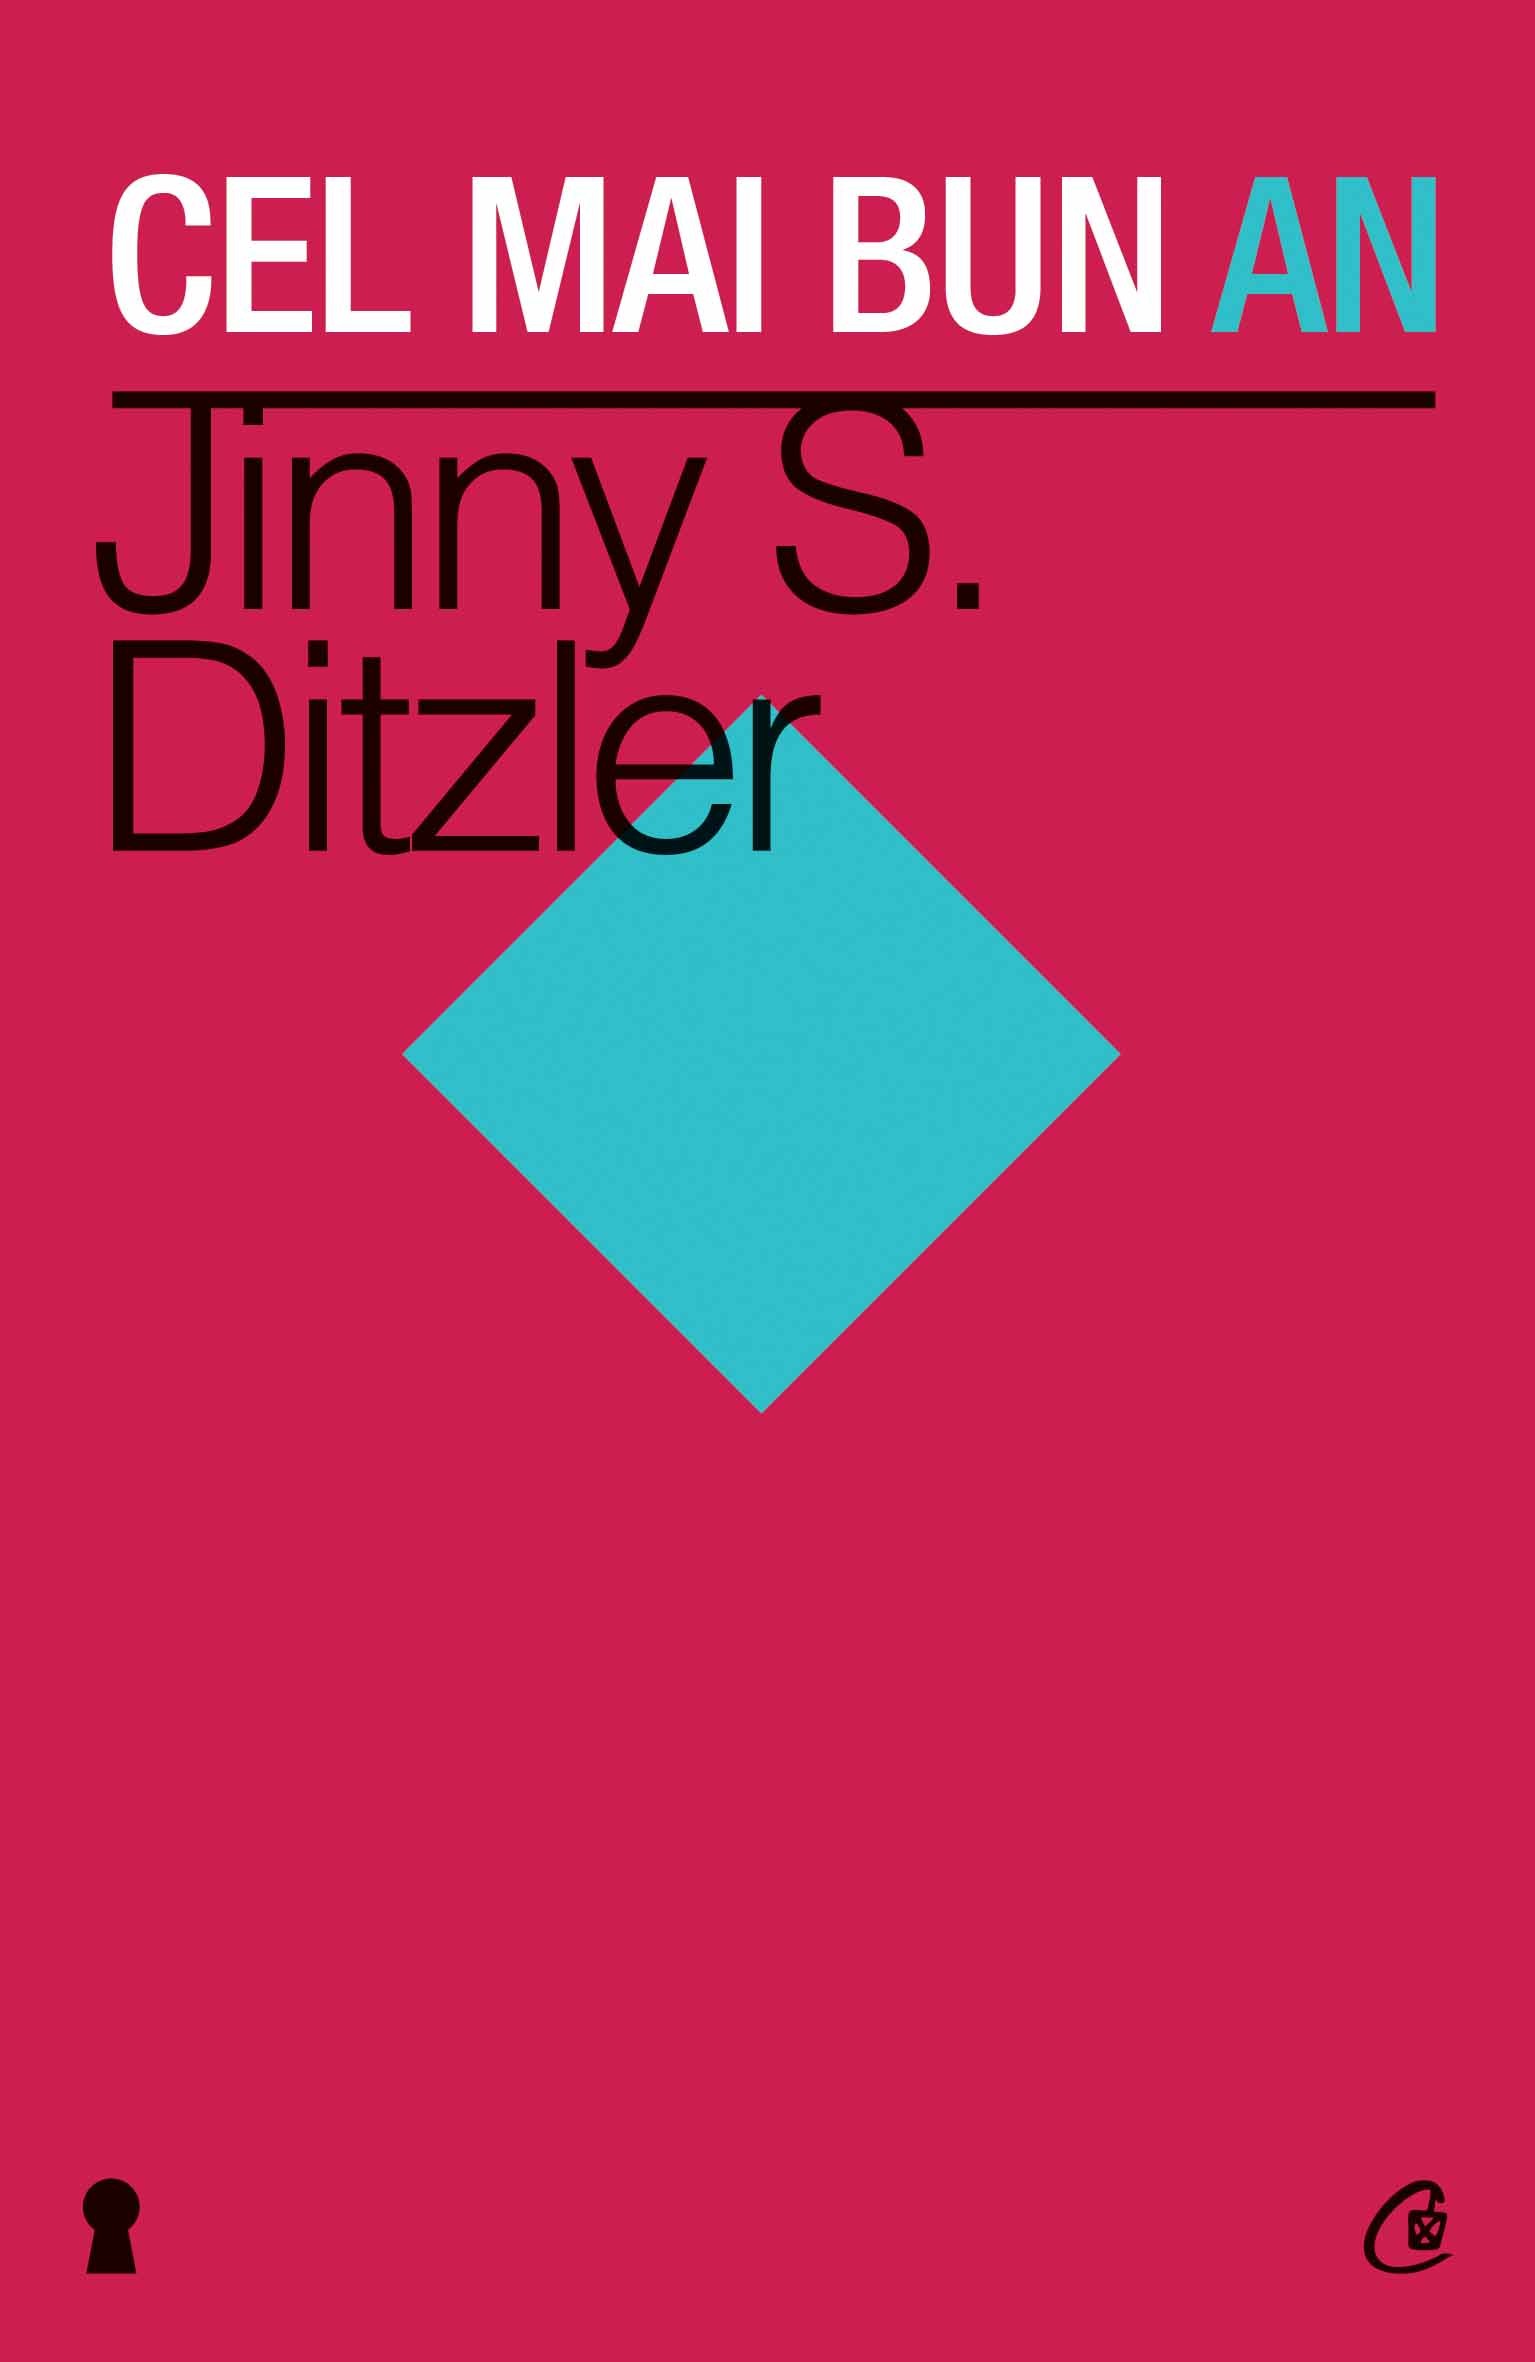 Cel mai bun an ed.2 - Jinny S. Ditzler